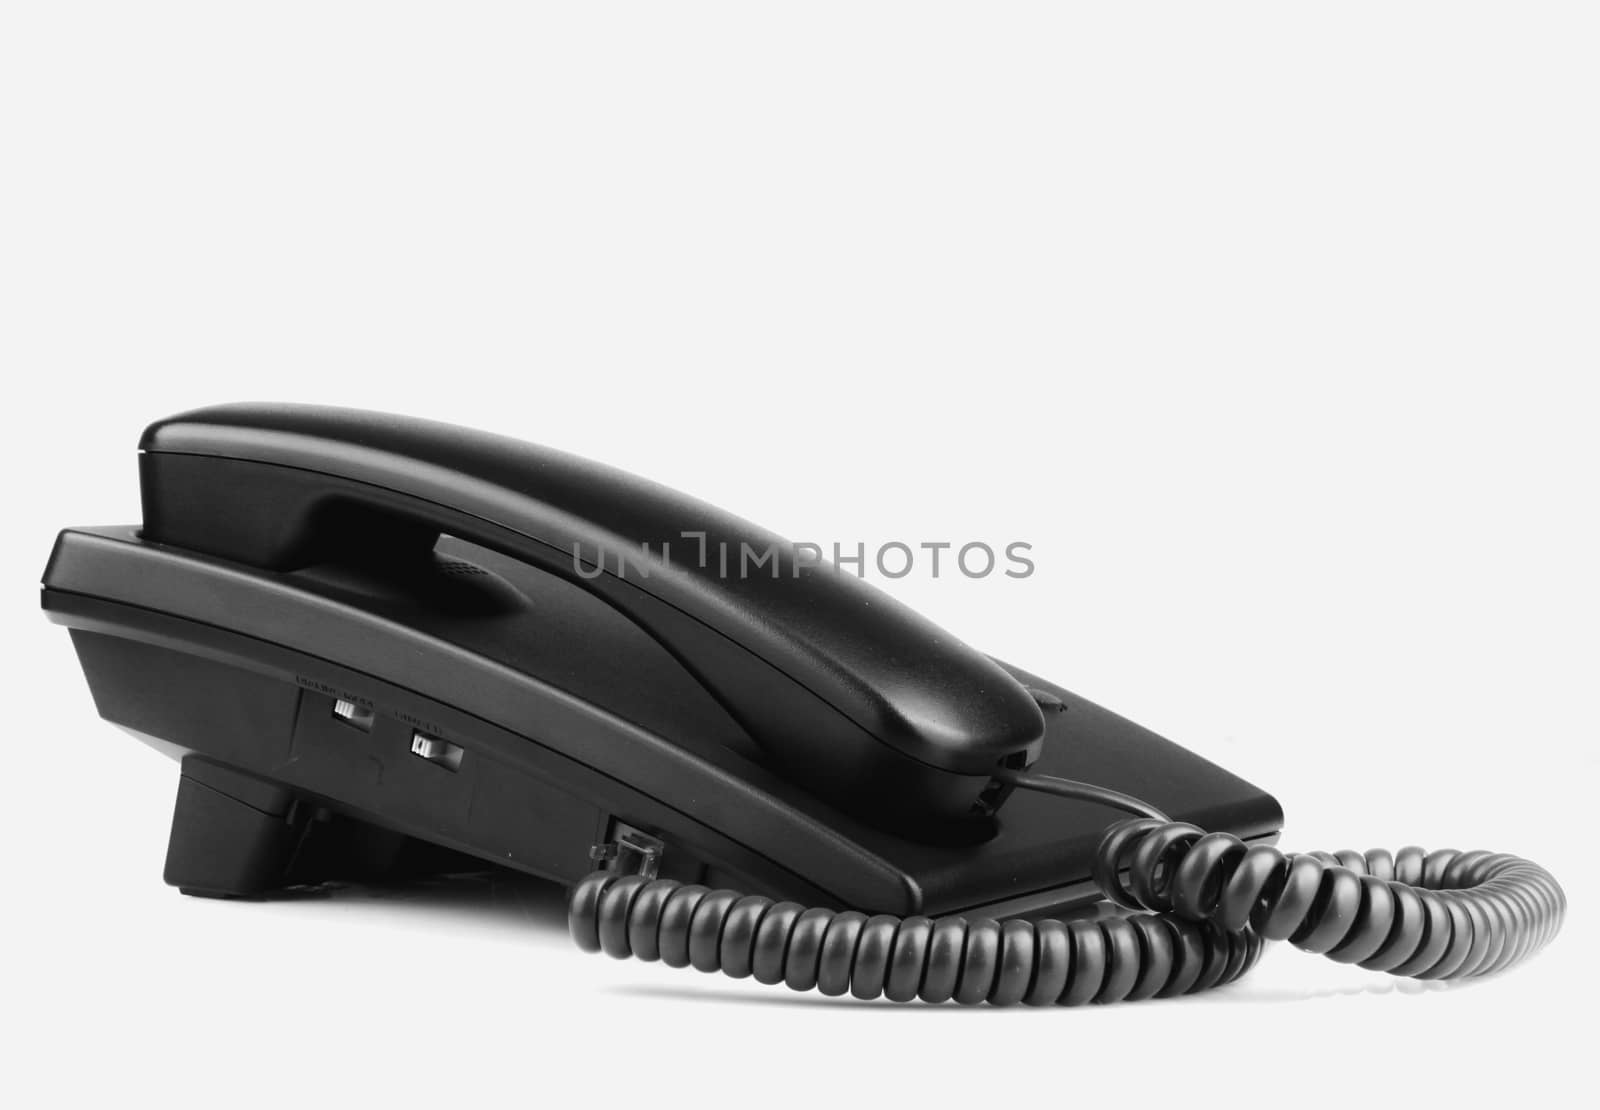 Telephone Isolated On White Background by nenovbrothers